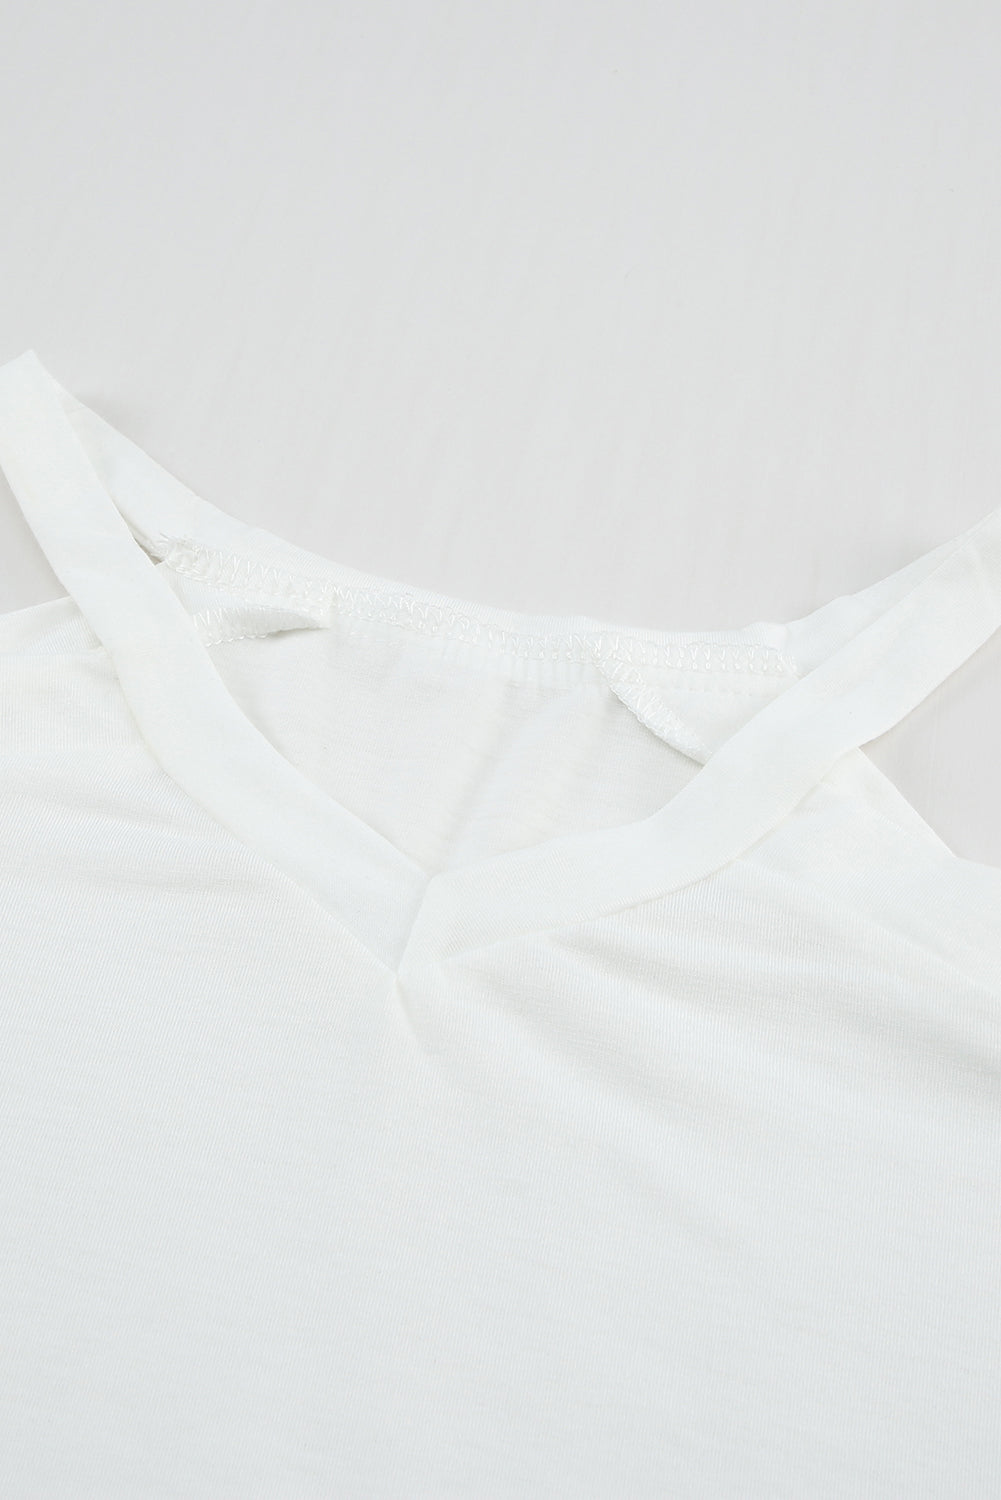 T-shirt a maniche lunghe con spalle scoperte ritagliate a righe in rete